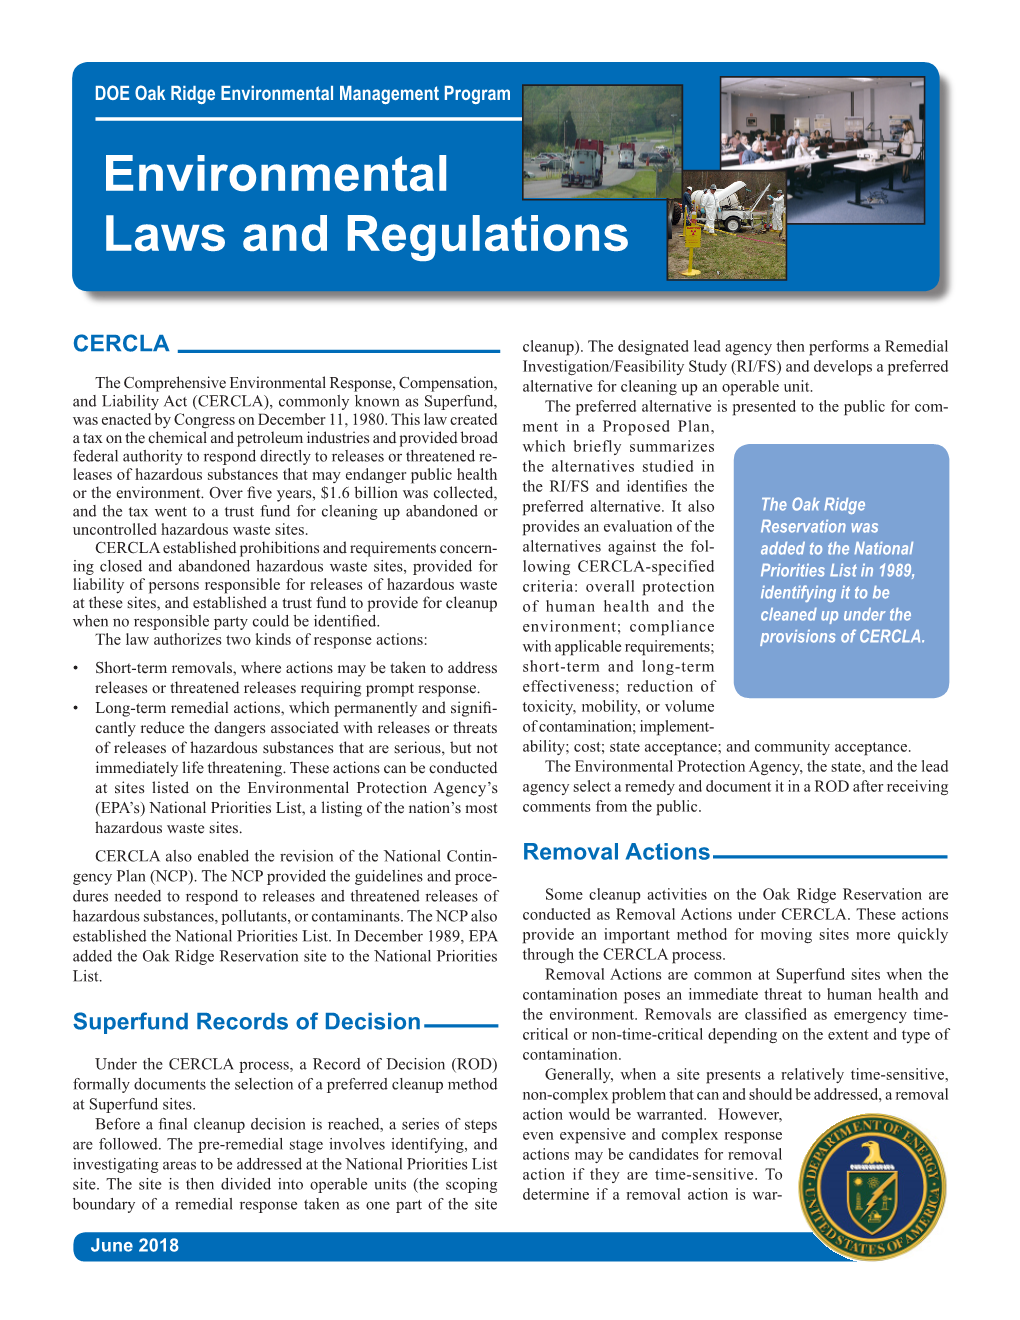 Environmental Laws and Regulations